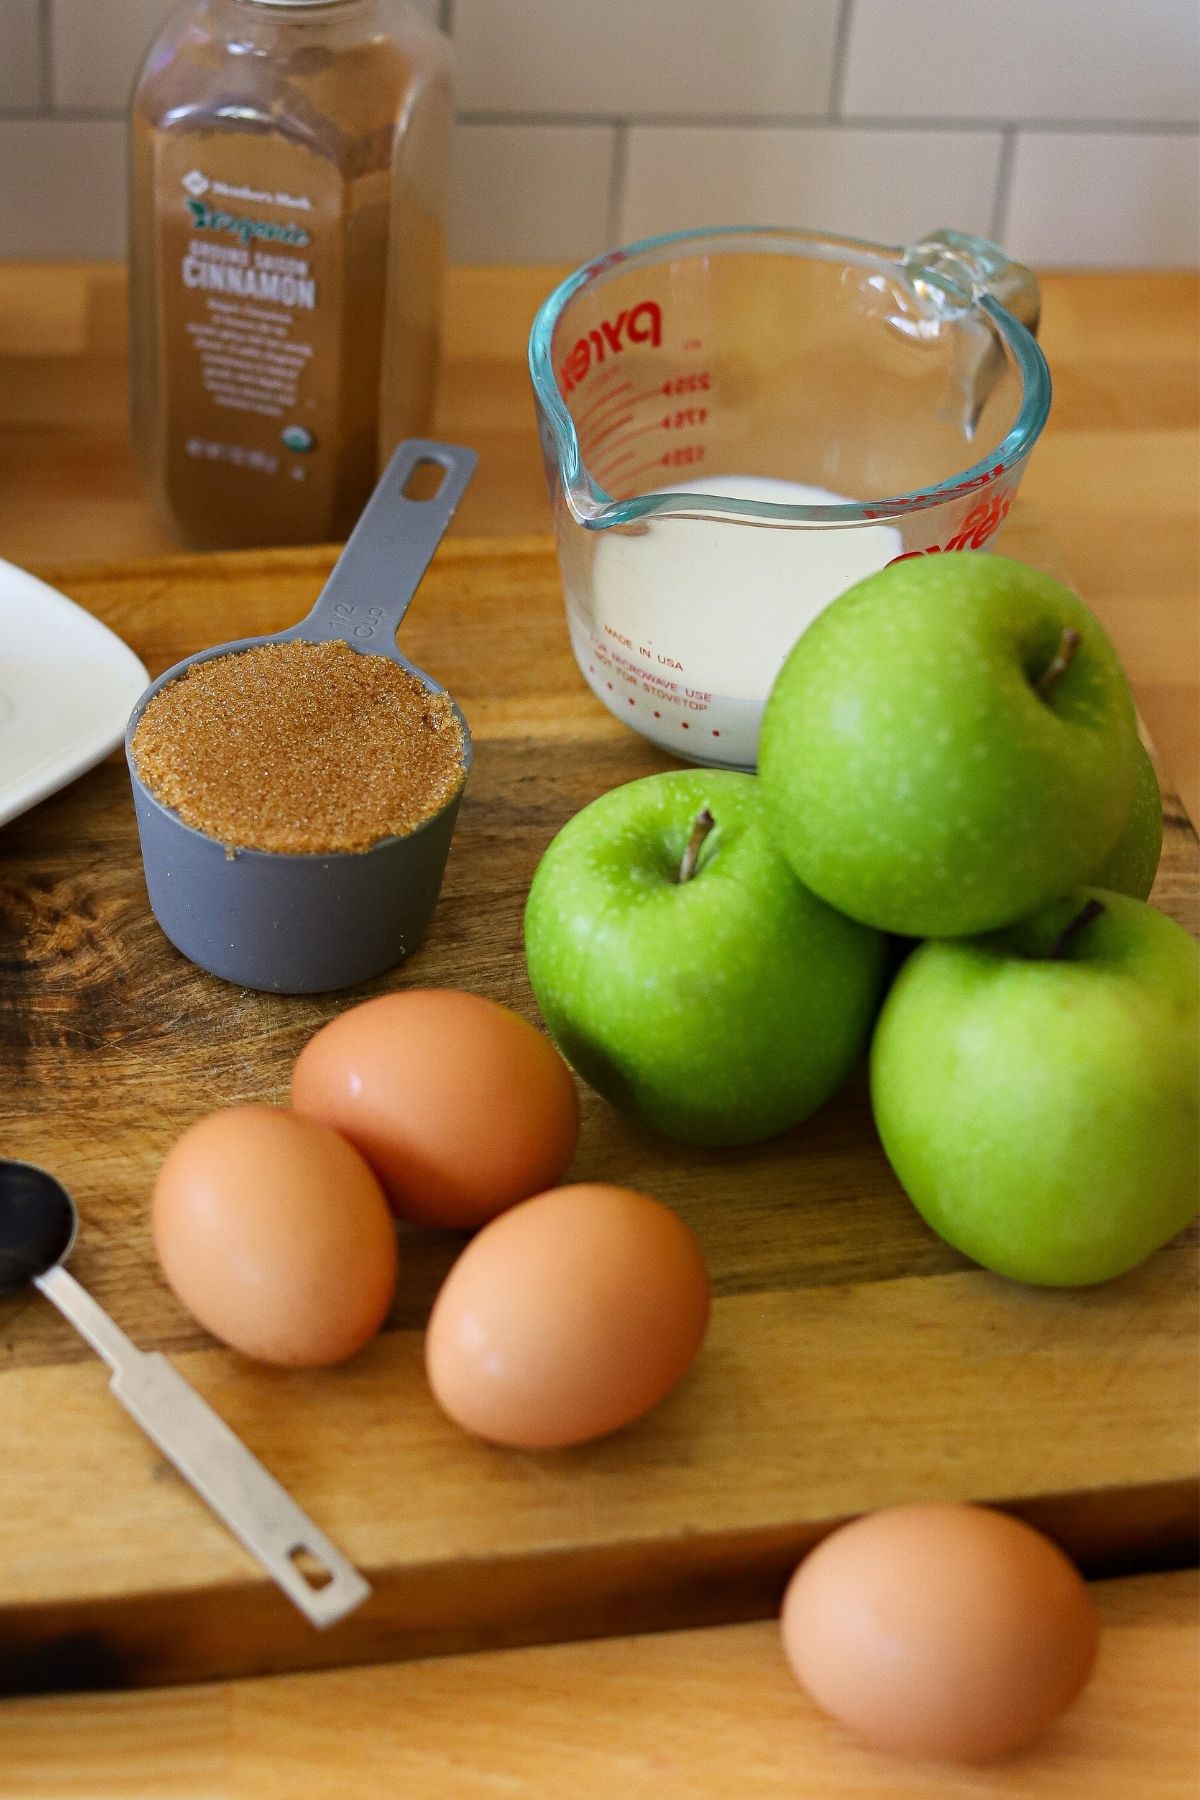 ingredients for gluten free apple cake including granny smith apples, brown sugar, eggs, almond flour, milk, cinnamon, and vanilla.